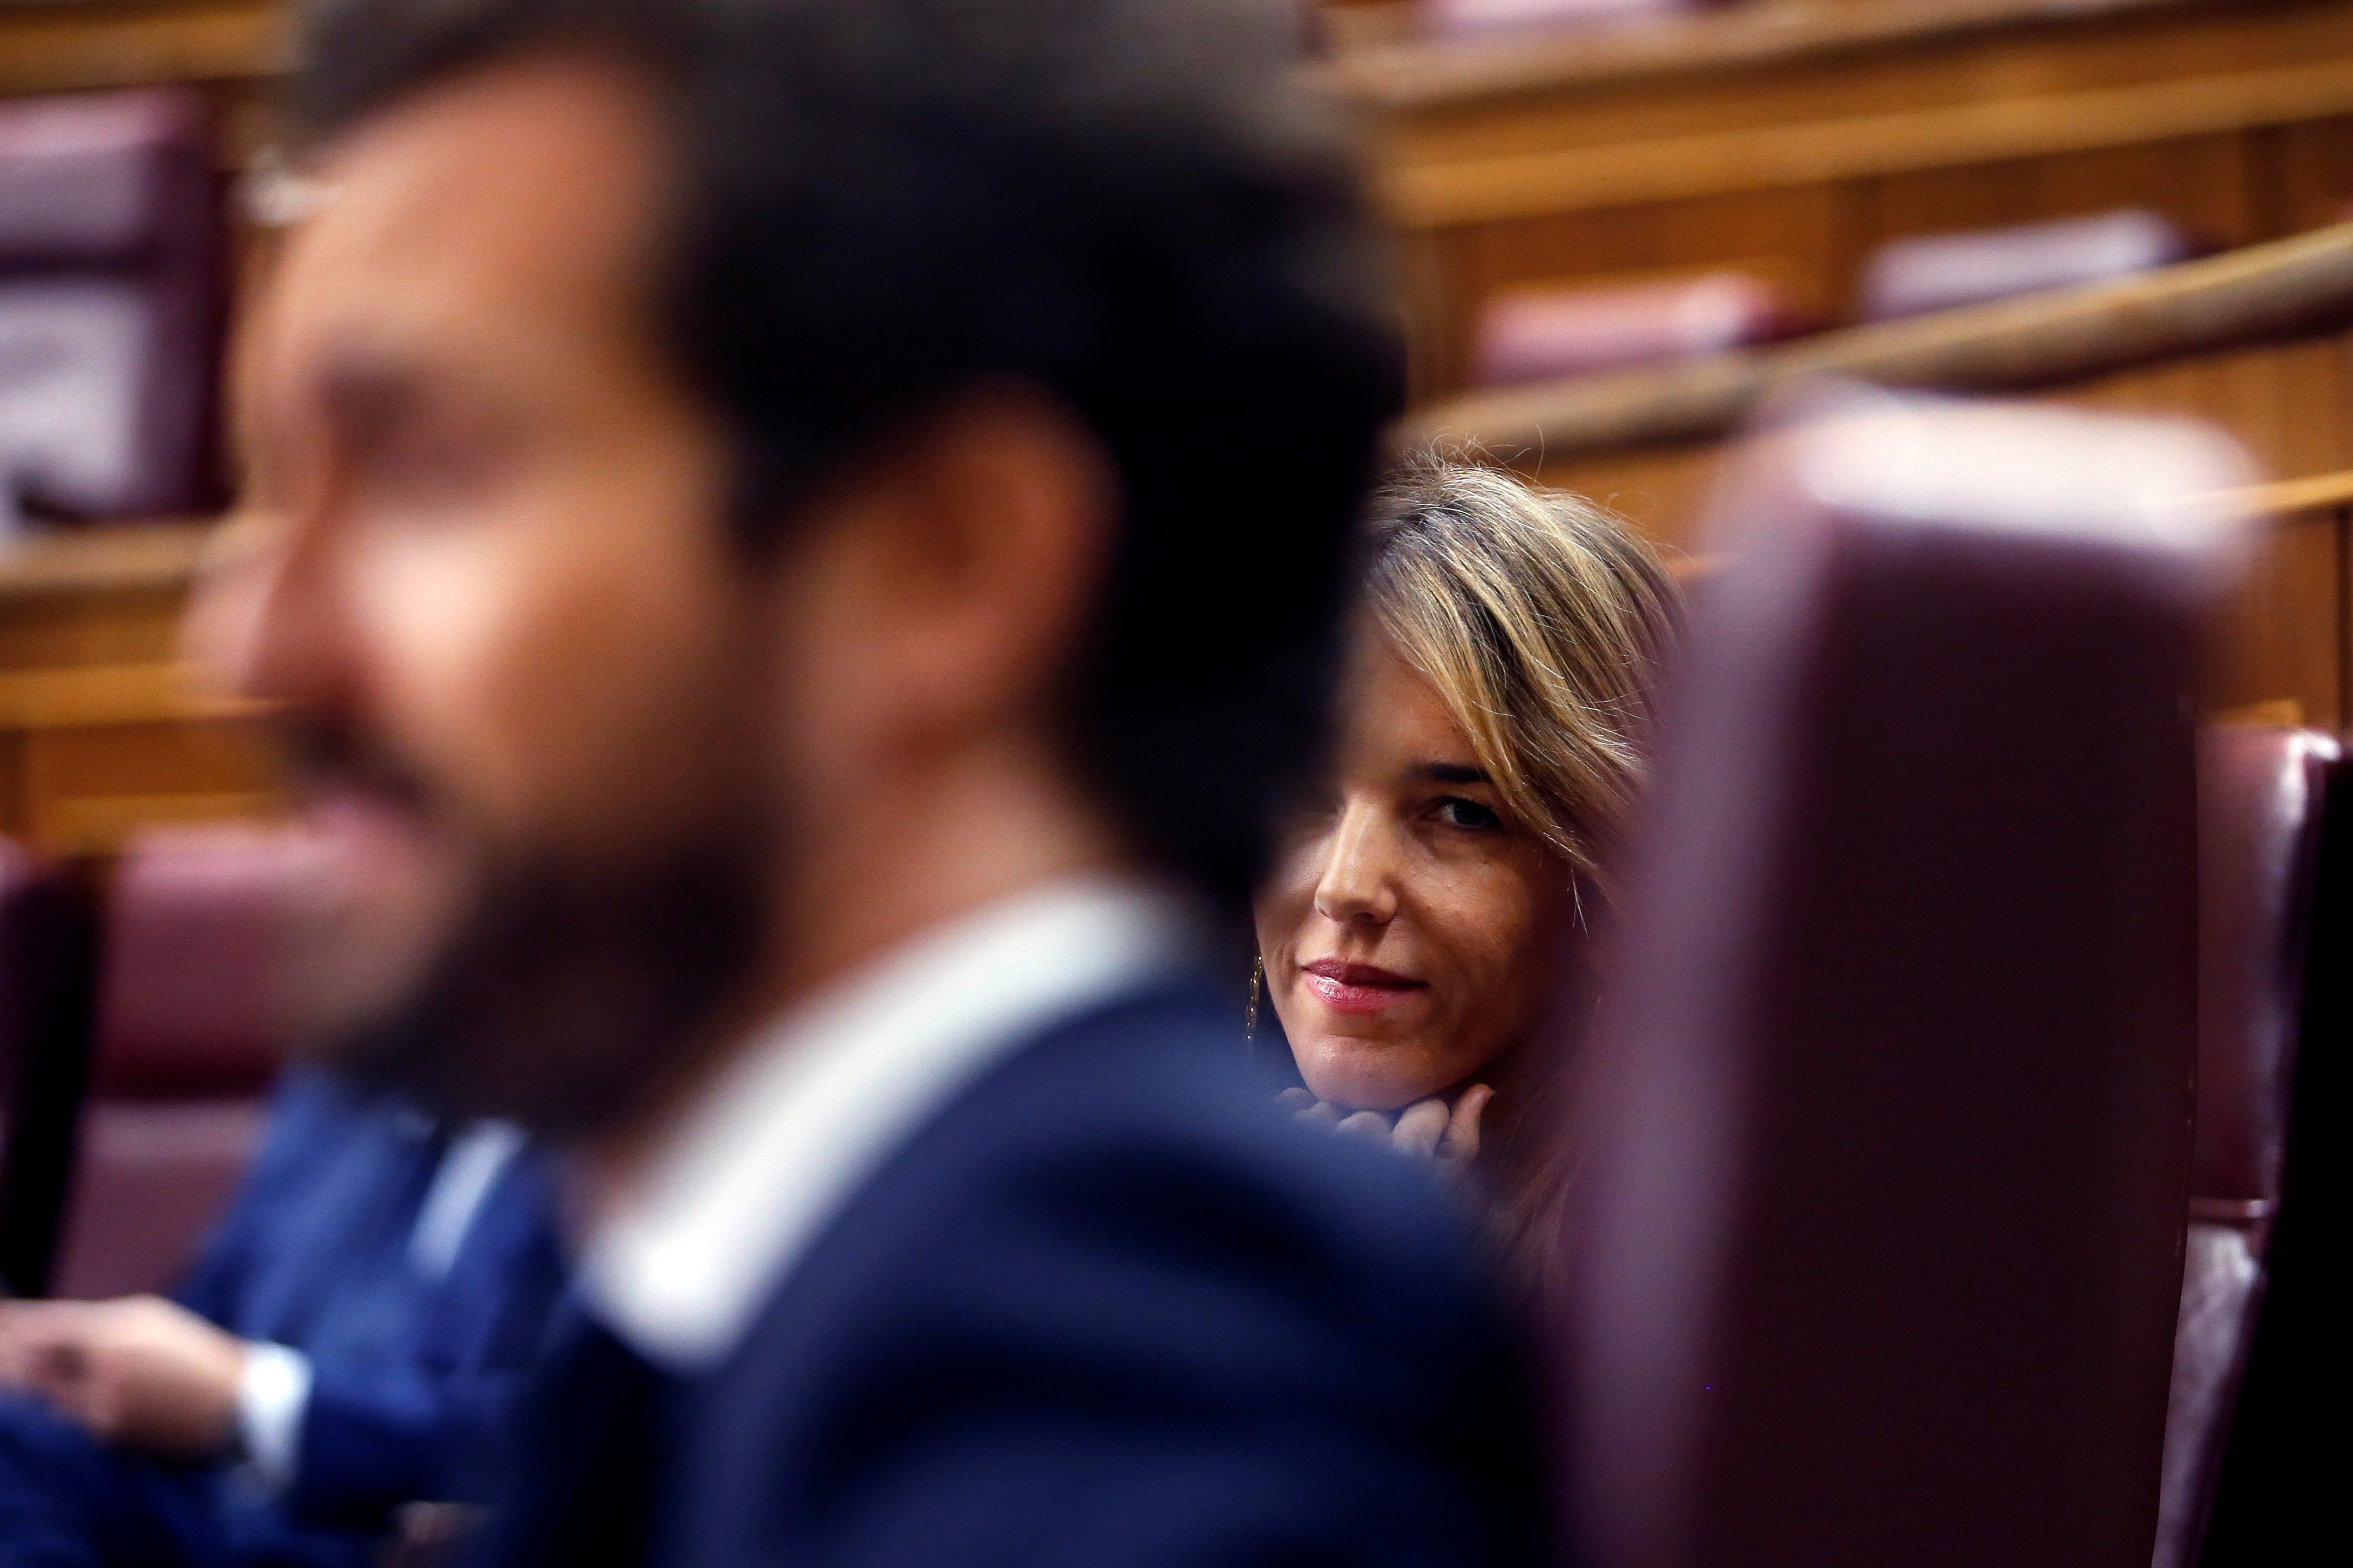 "¿Ha visto Mistetas?": Cayetana, hundida por hablar de chistes, perros y Rajoy